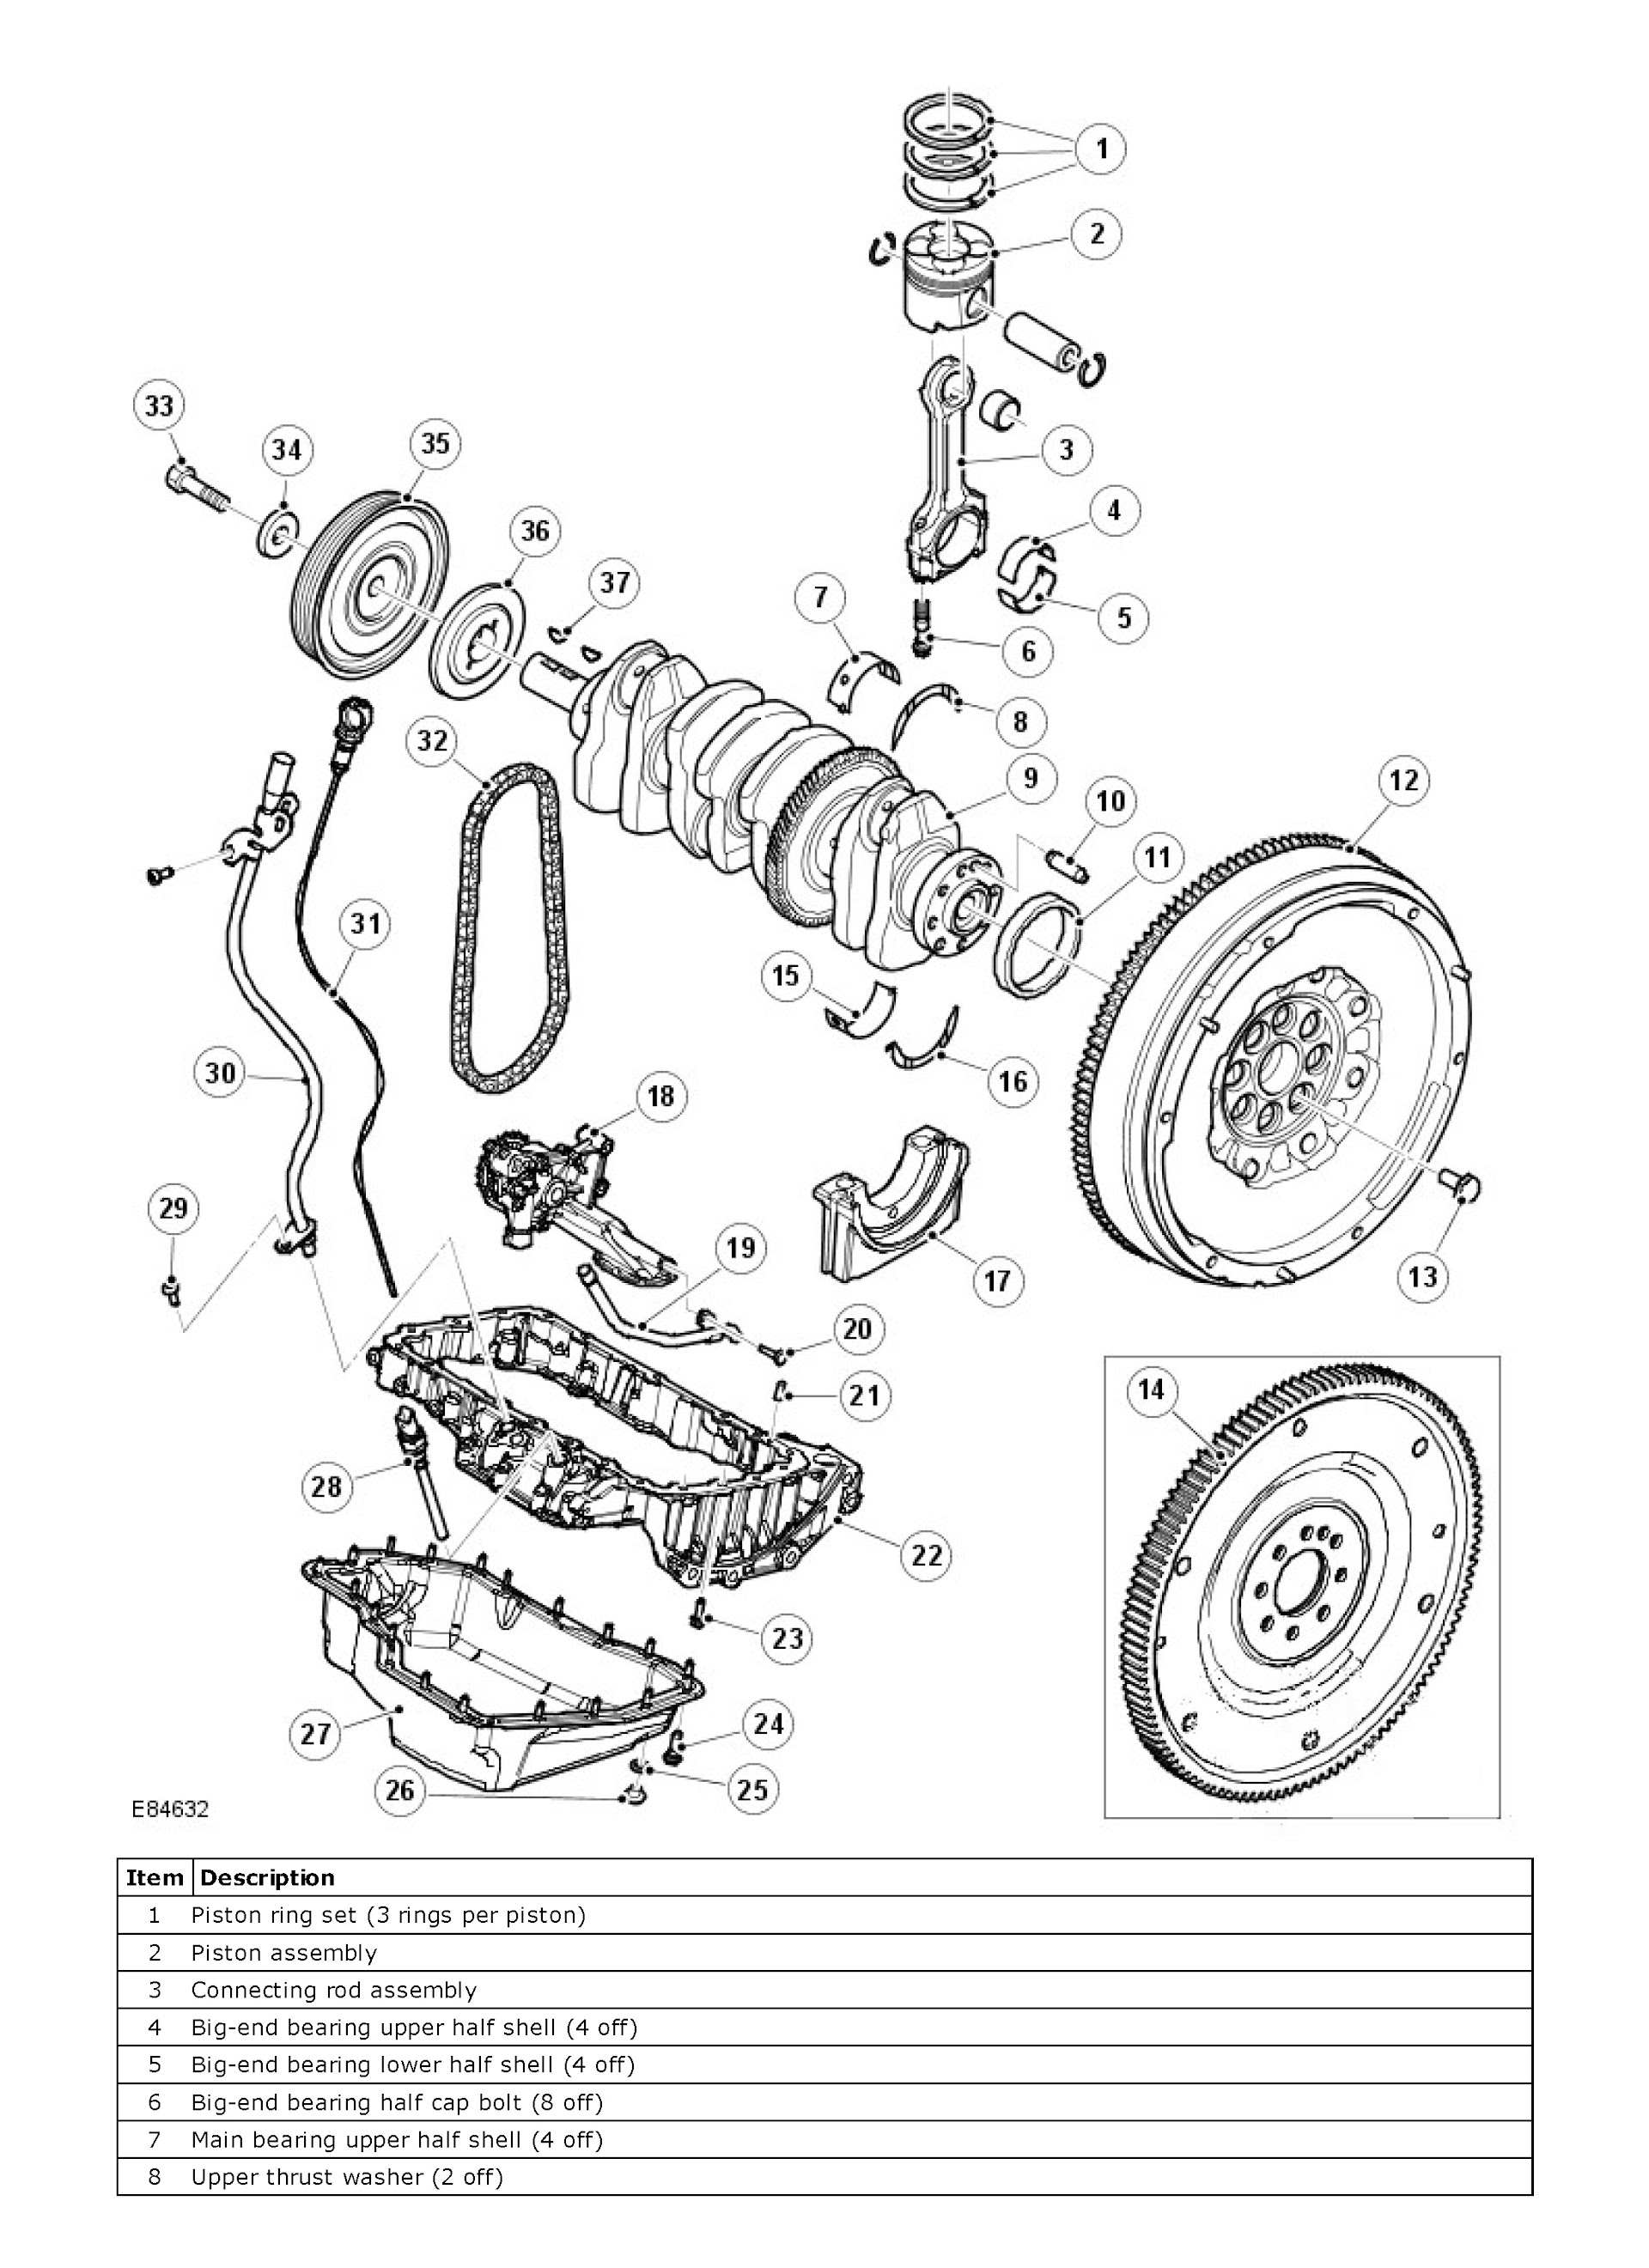 2016 Range Rover Evoque Repair Manual, Engine Mechacnical